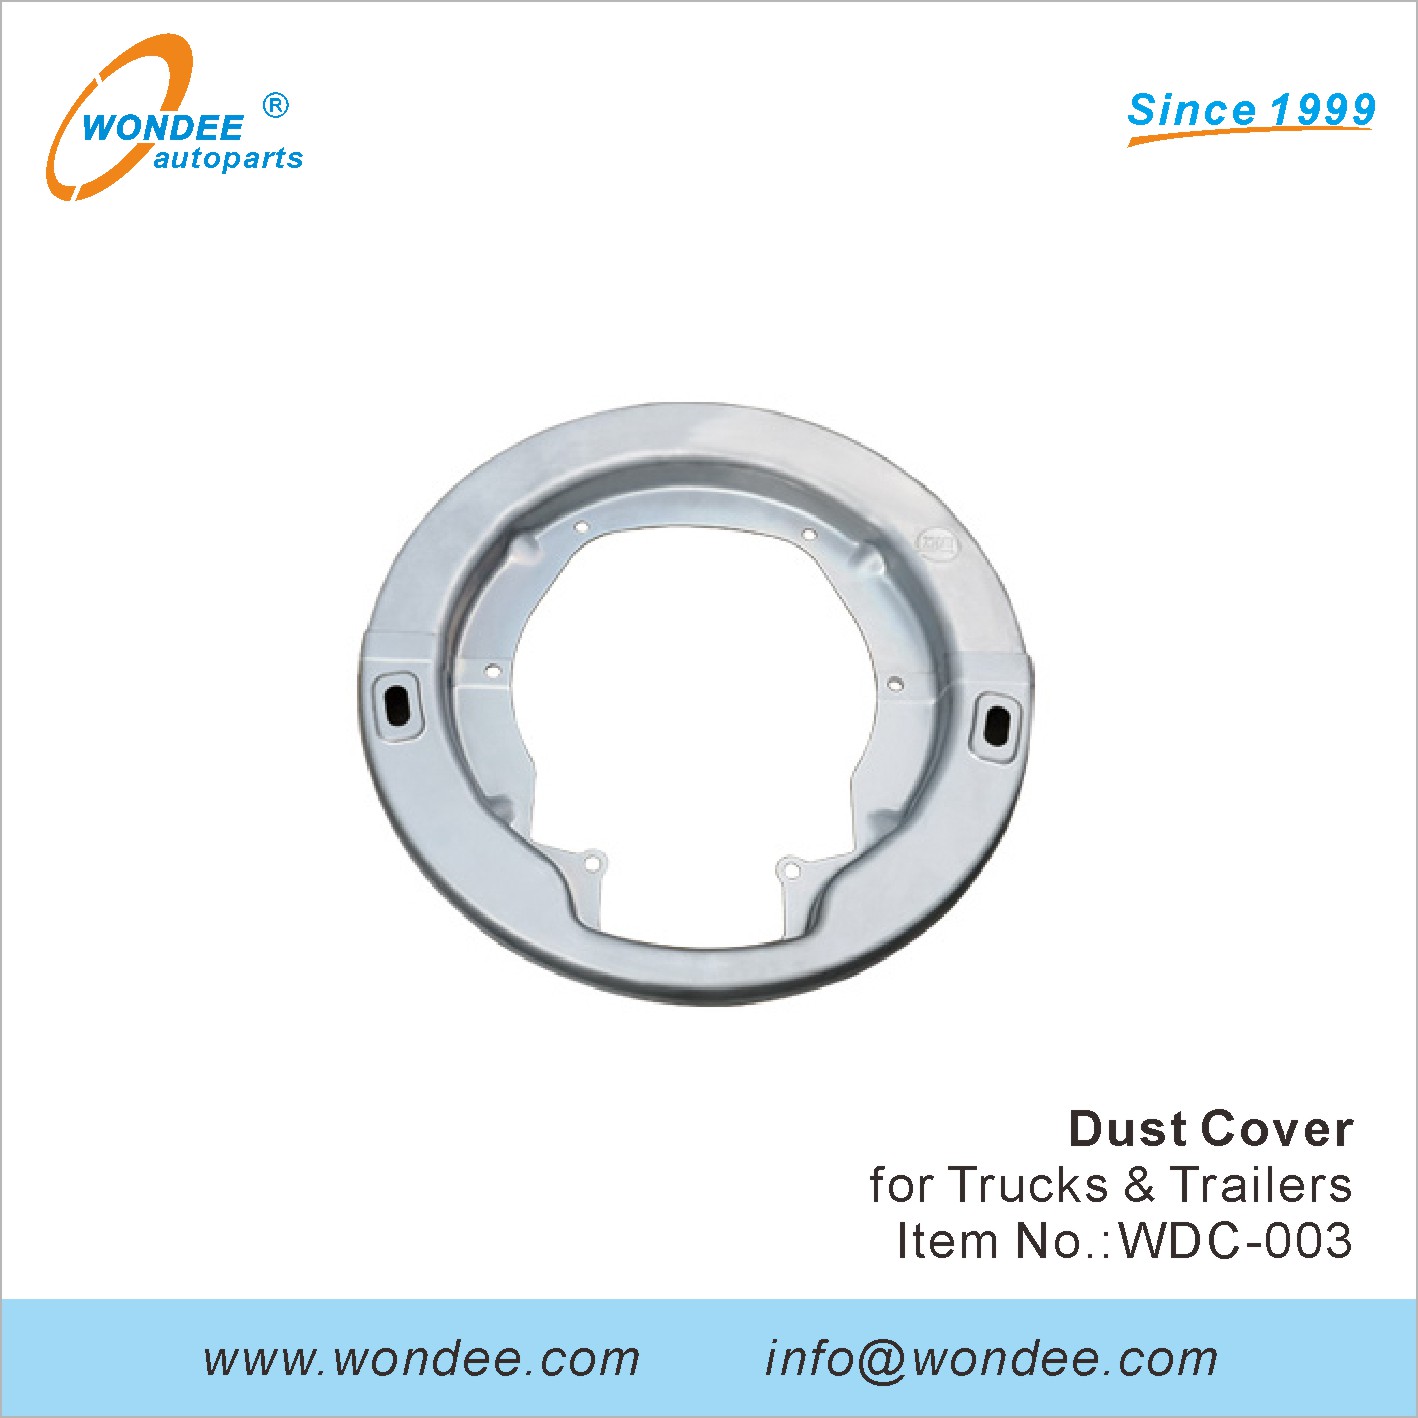 WONDEE dust cover (3)